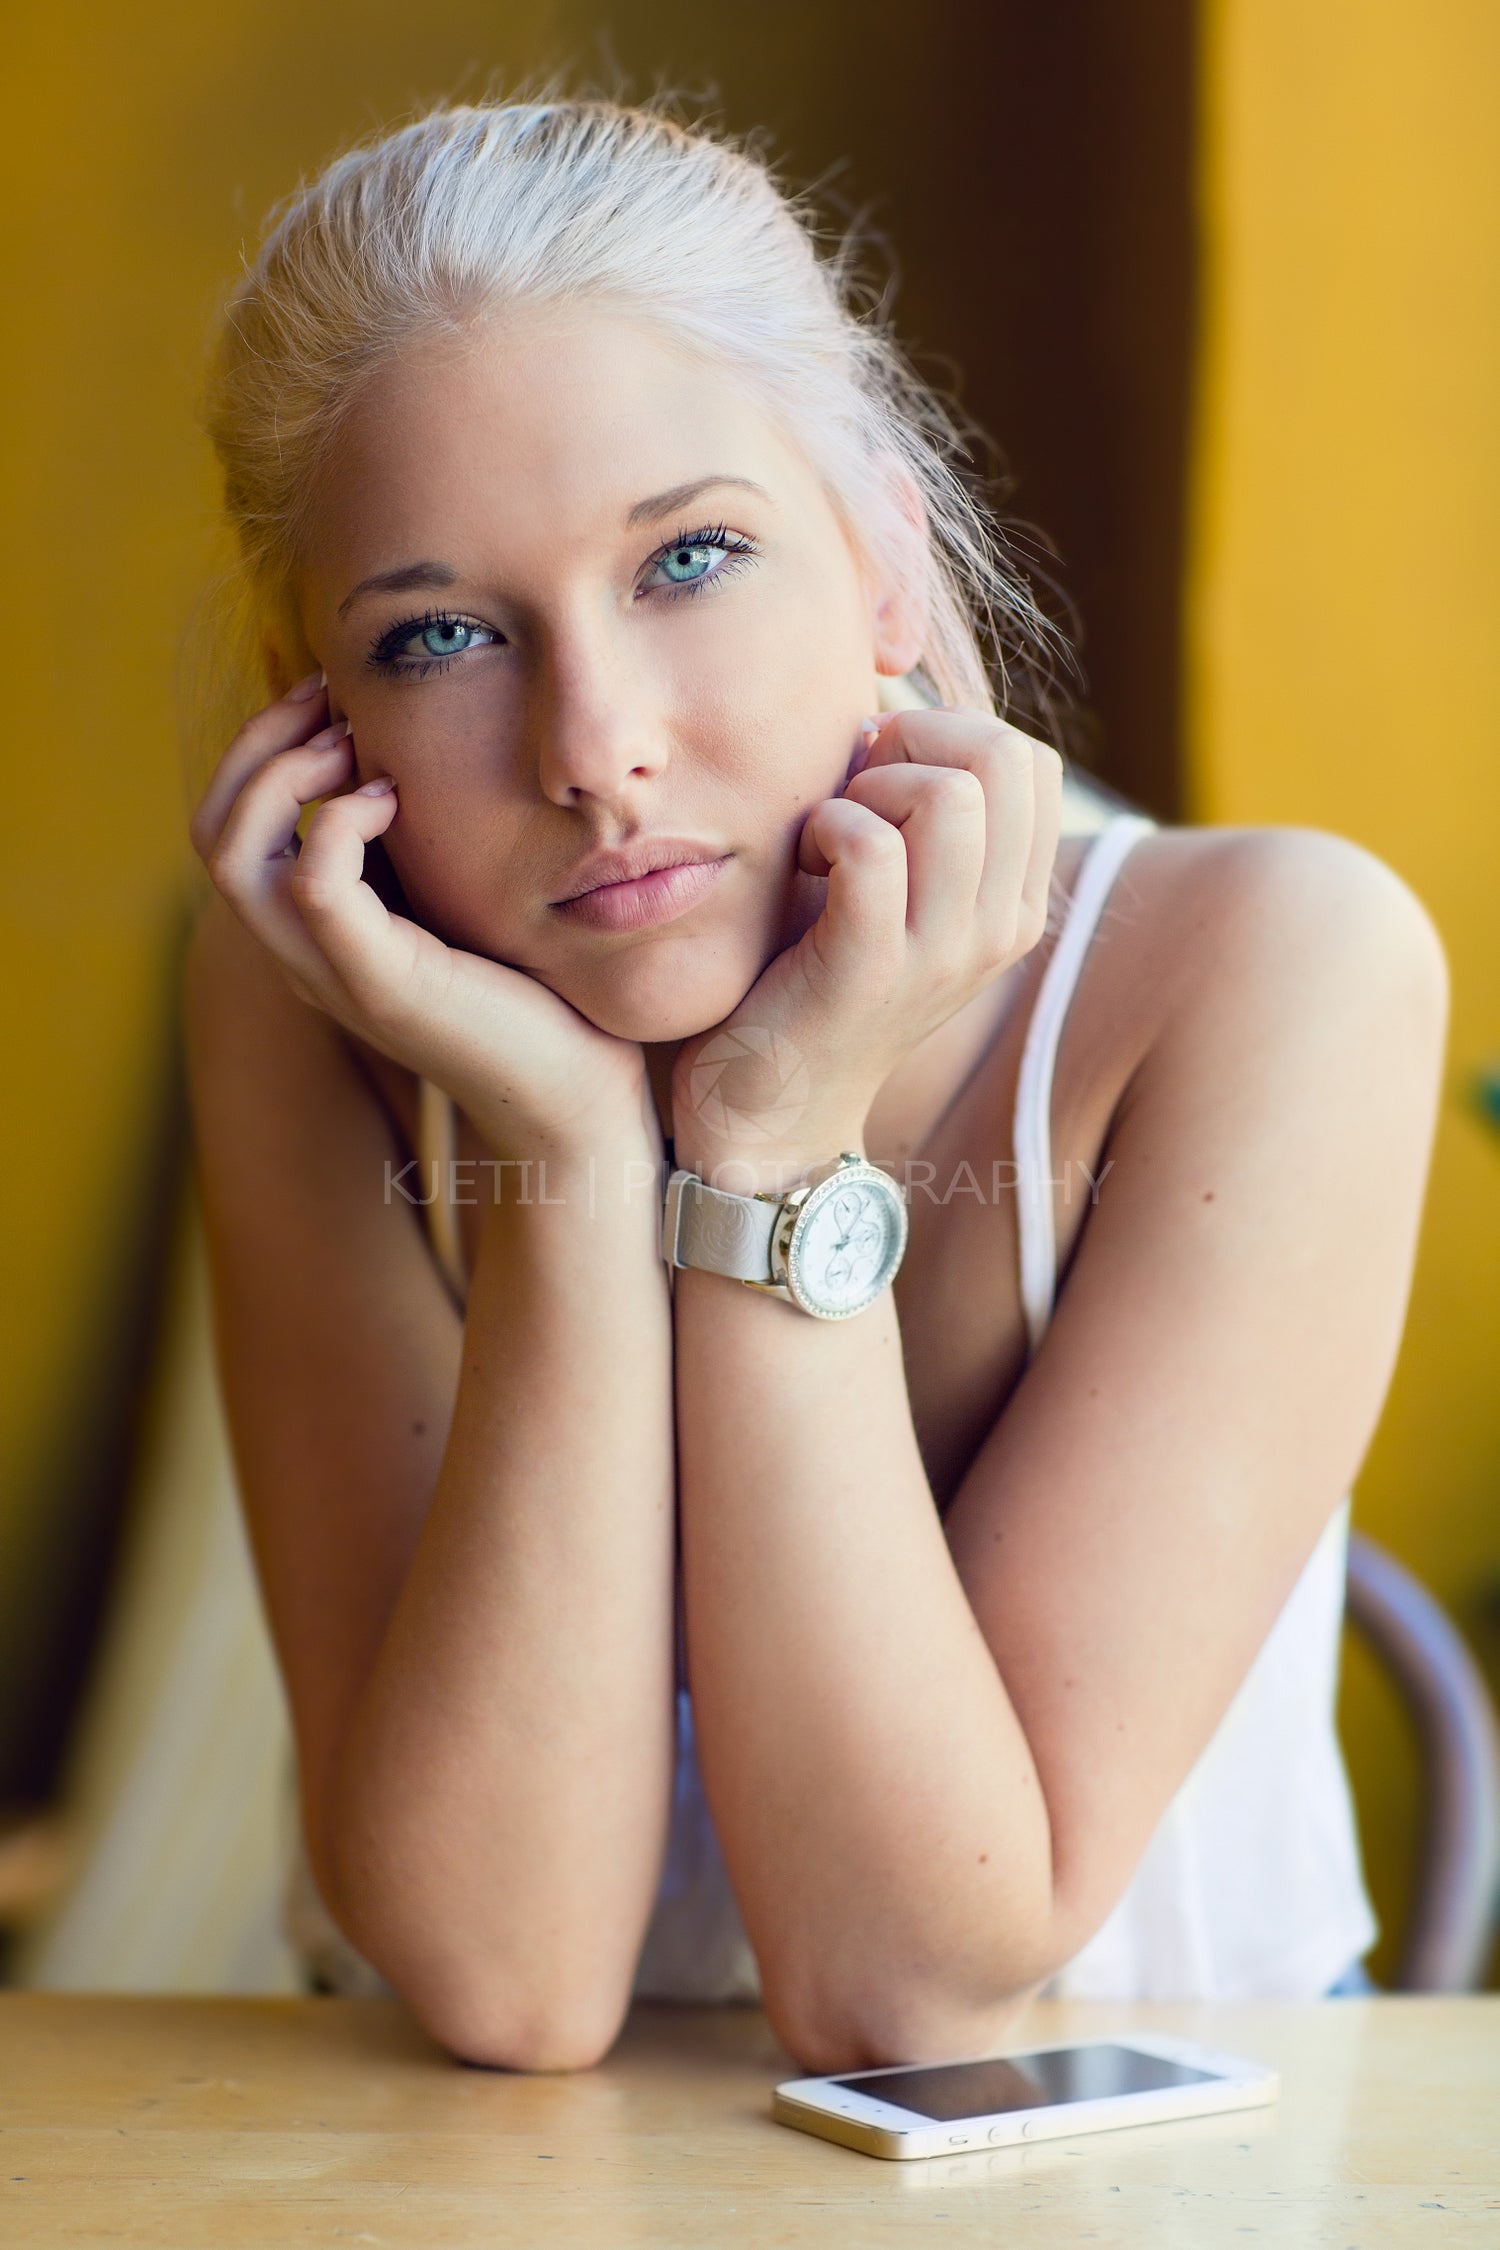 Thoughtful teenage girl with beautiful blue eyes